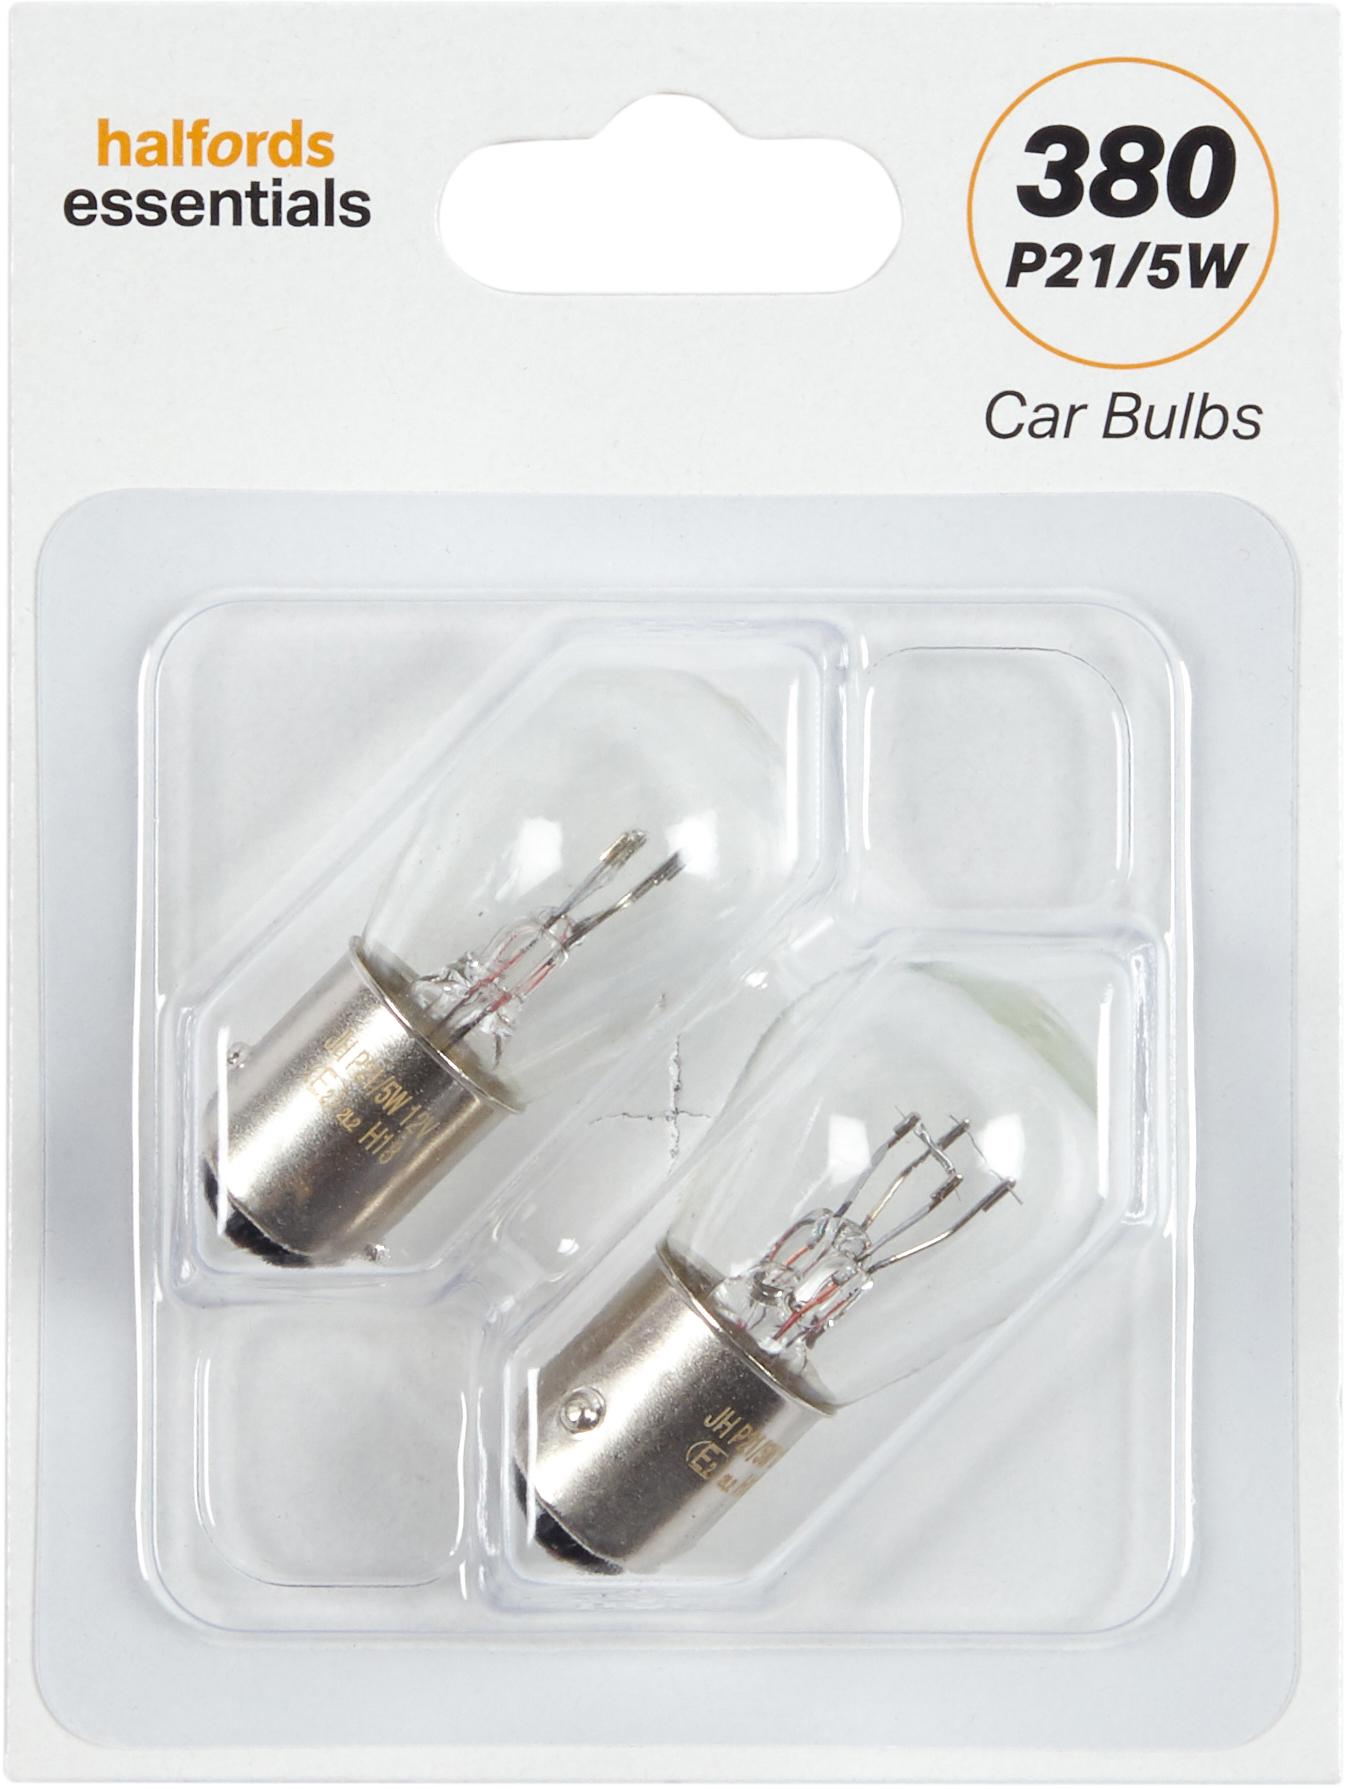 380 P21/5W Car Bulbs Halfords Essentials Twin Pack